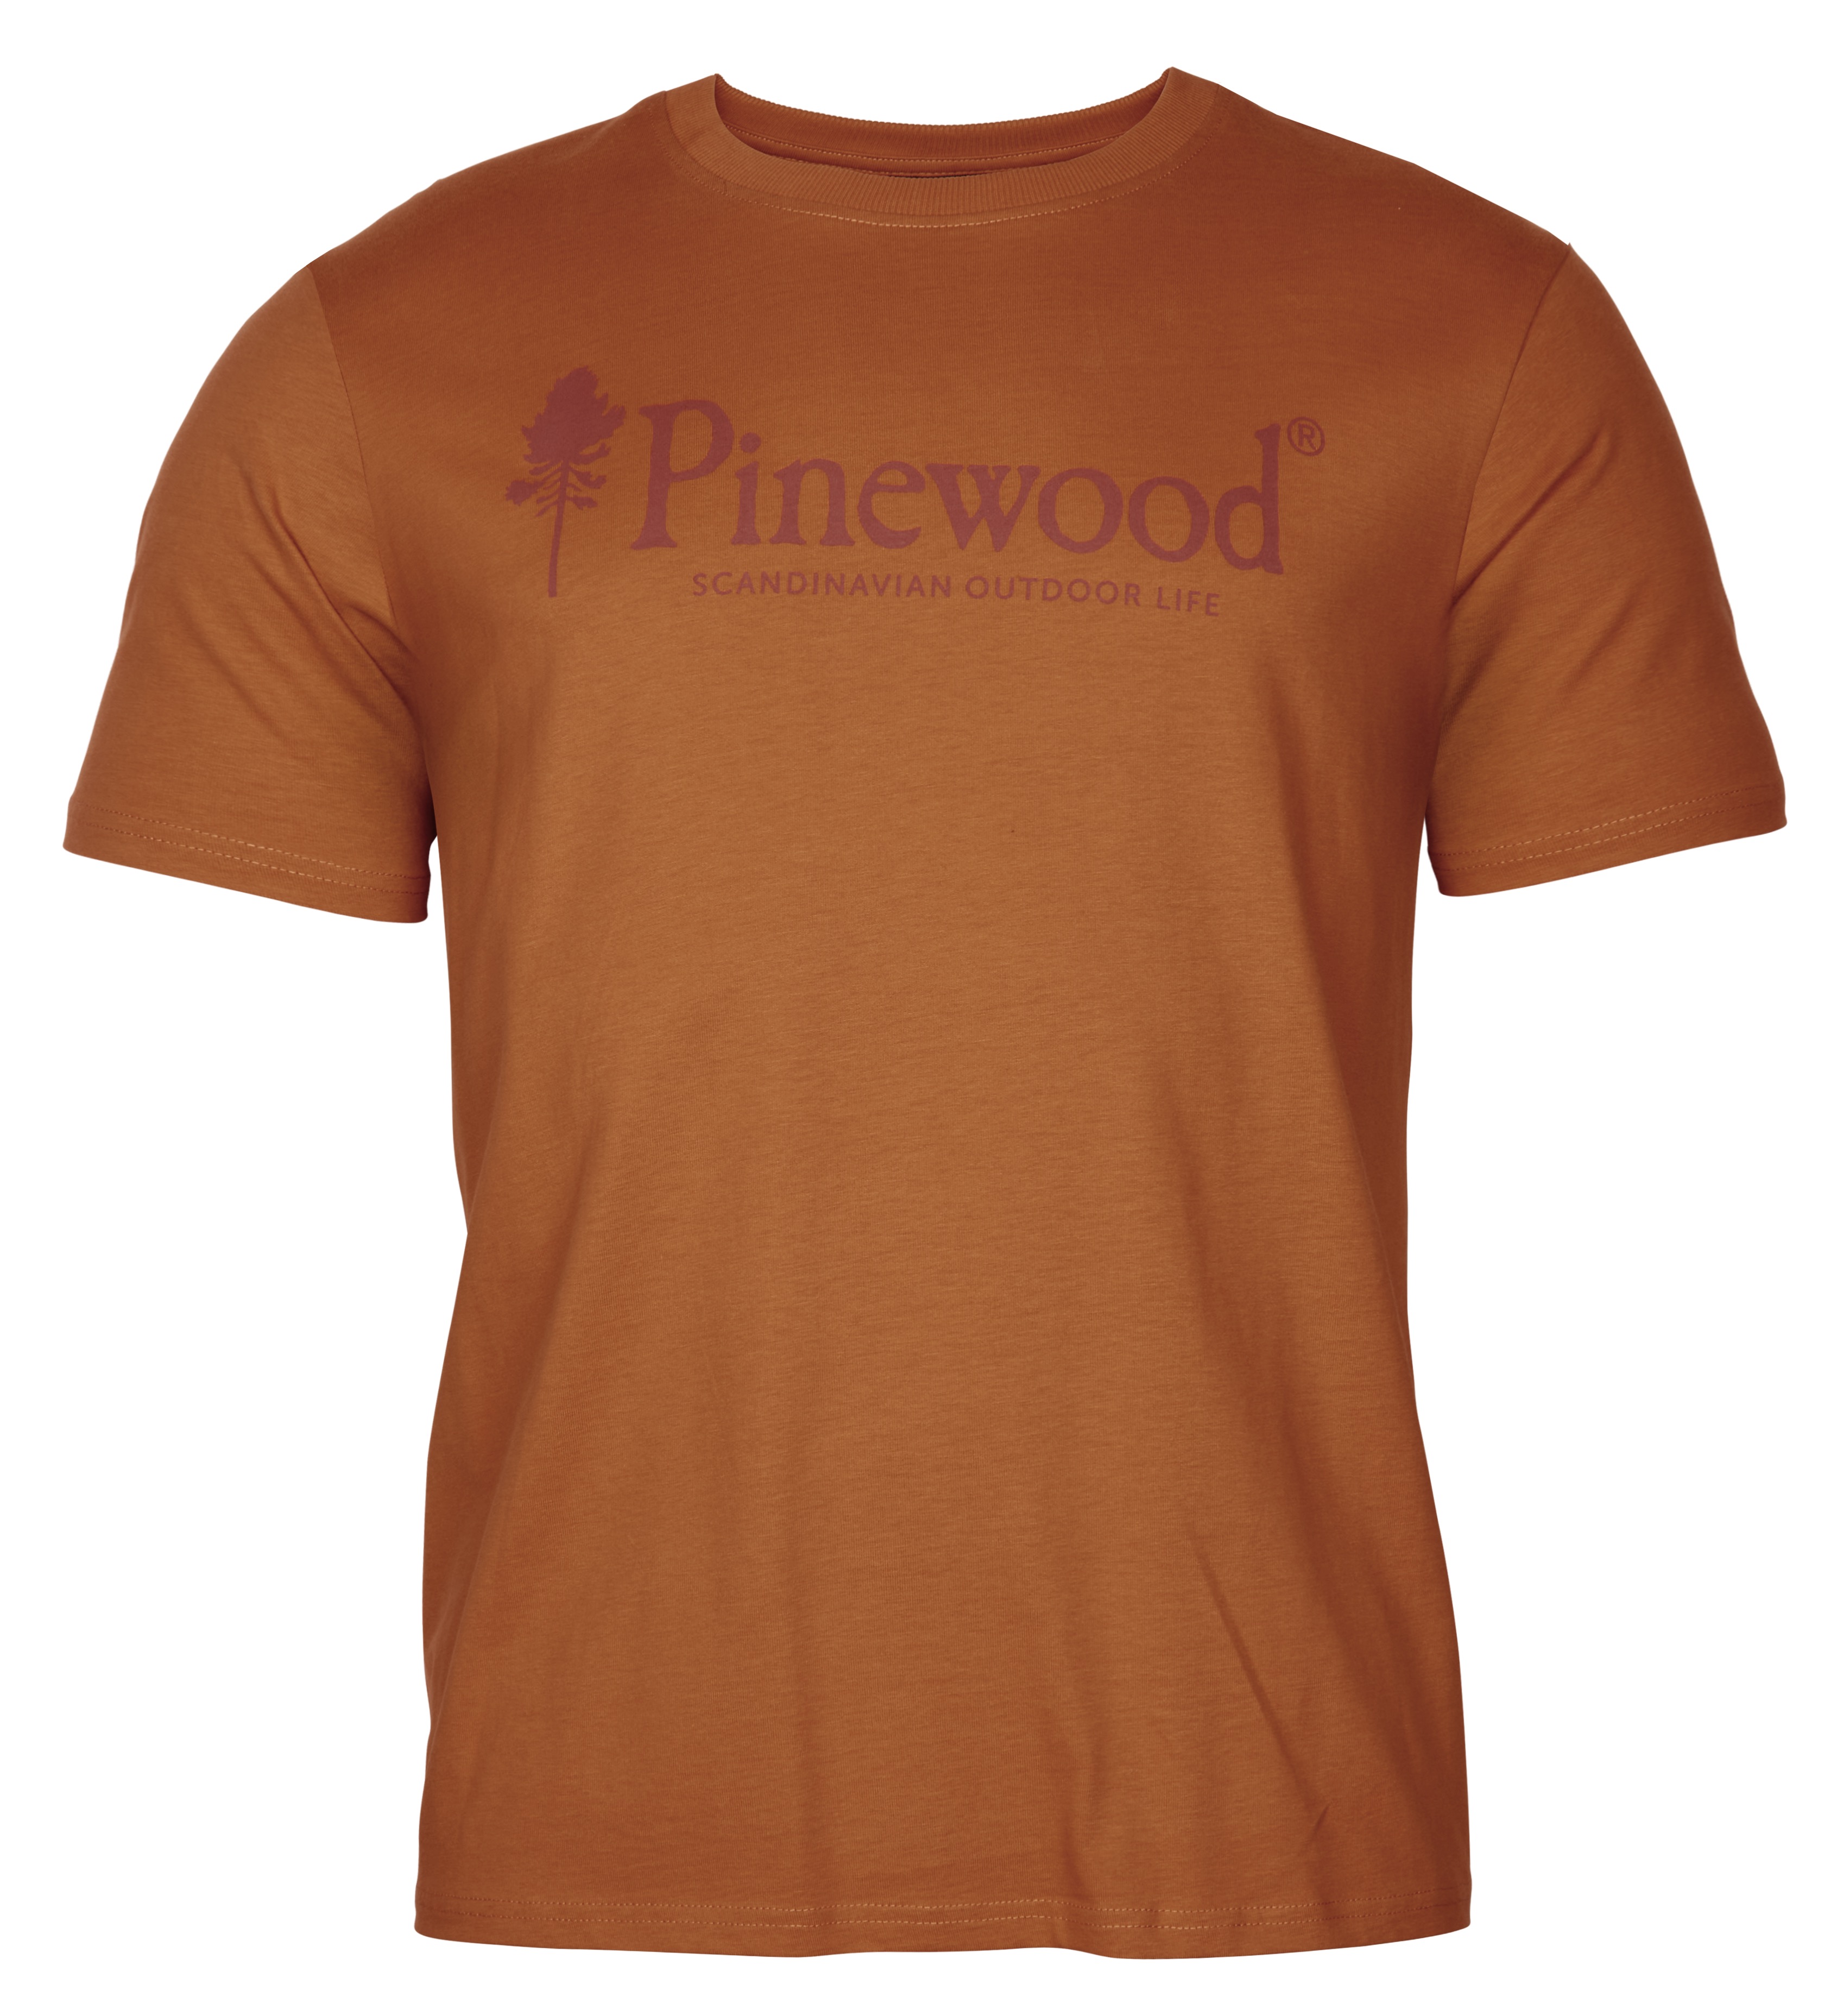 Pinewood Men’s Outdoor Life T-shirt Burned Orange